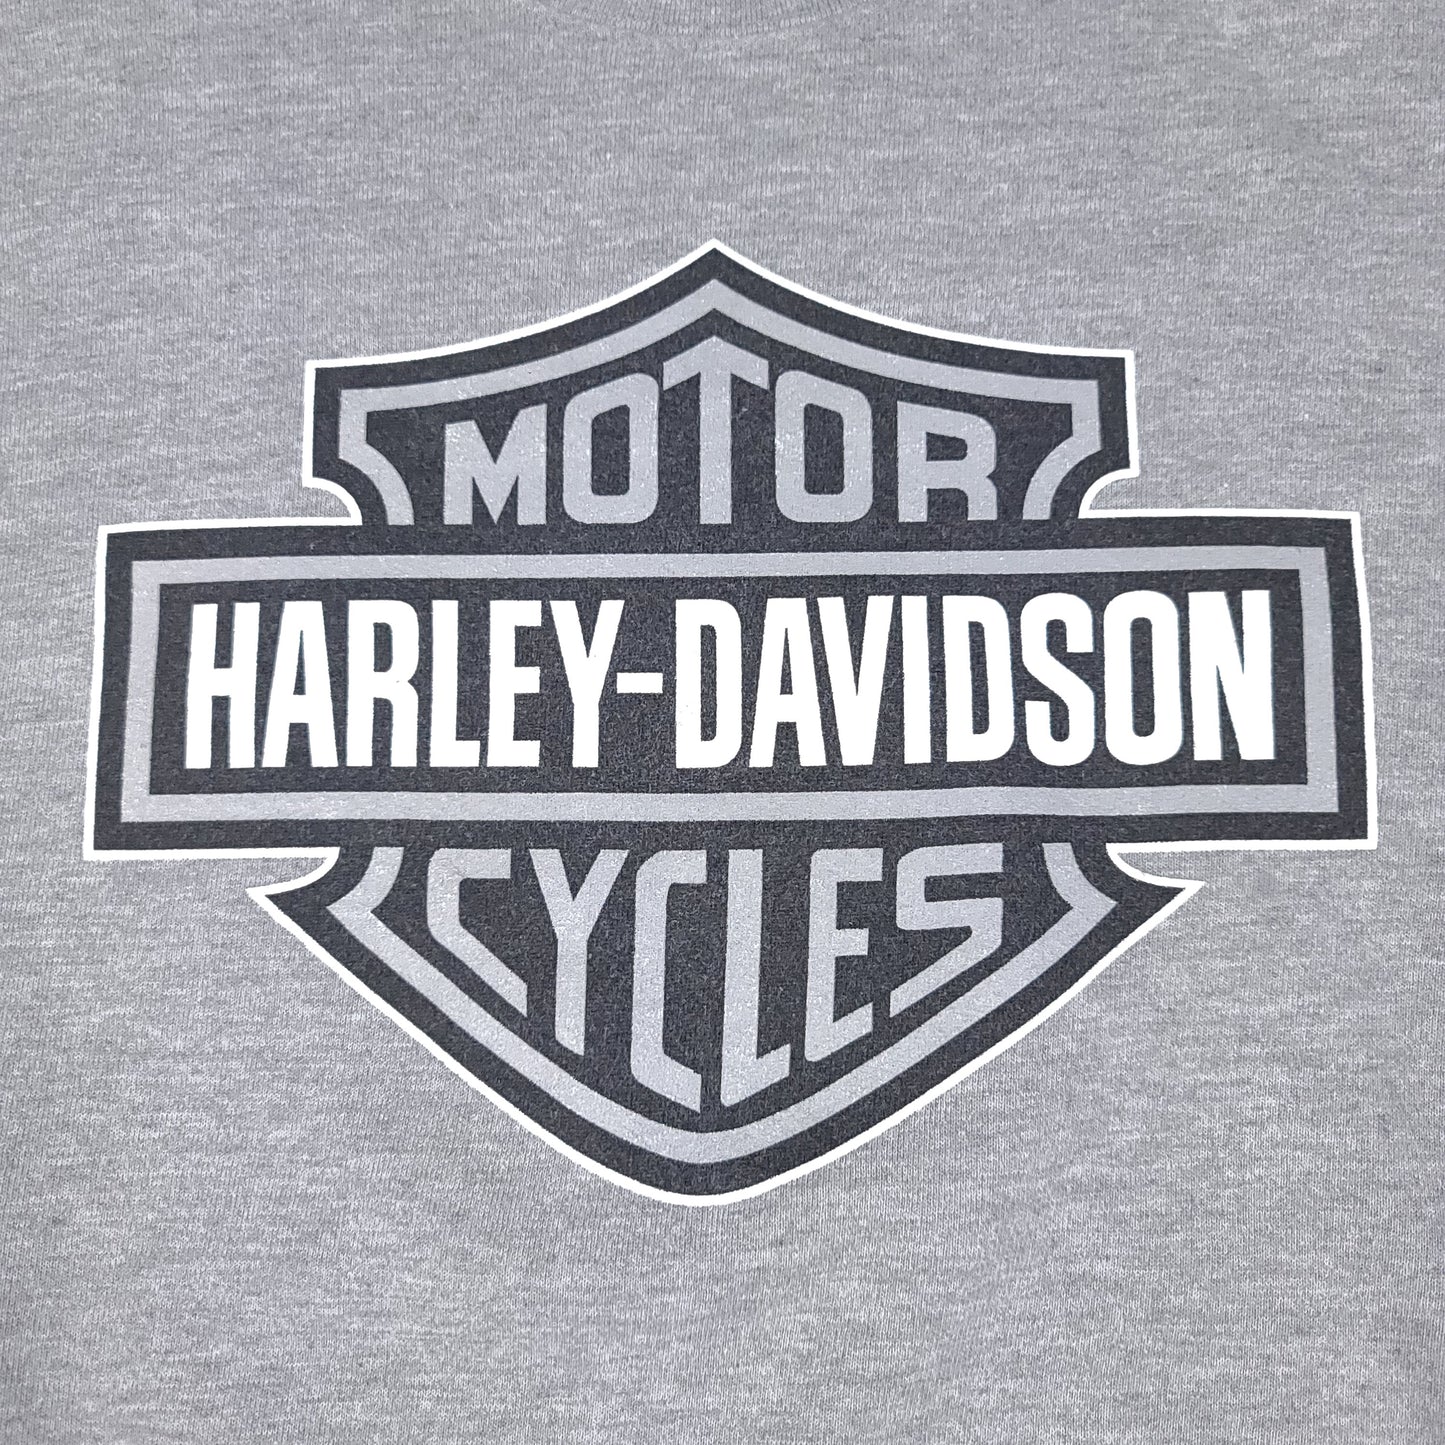 Harley Davidson Motorcycles Palatine Gray Sweatshirt